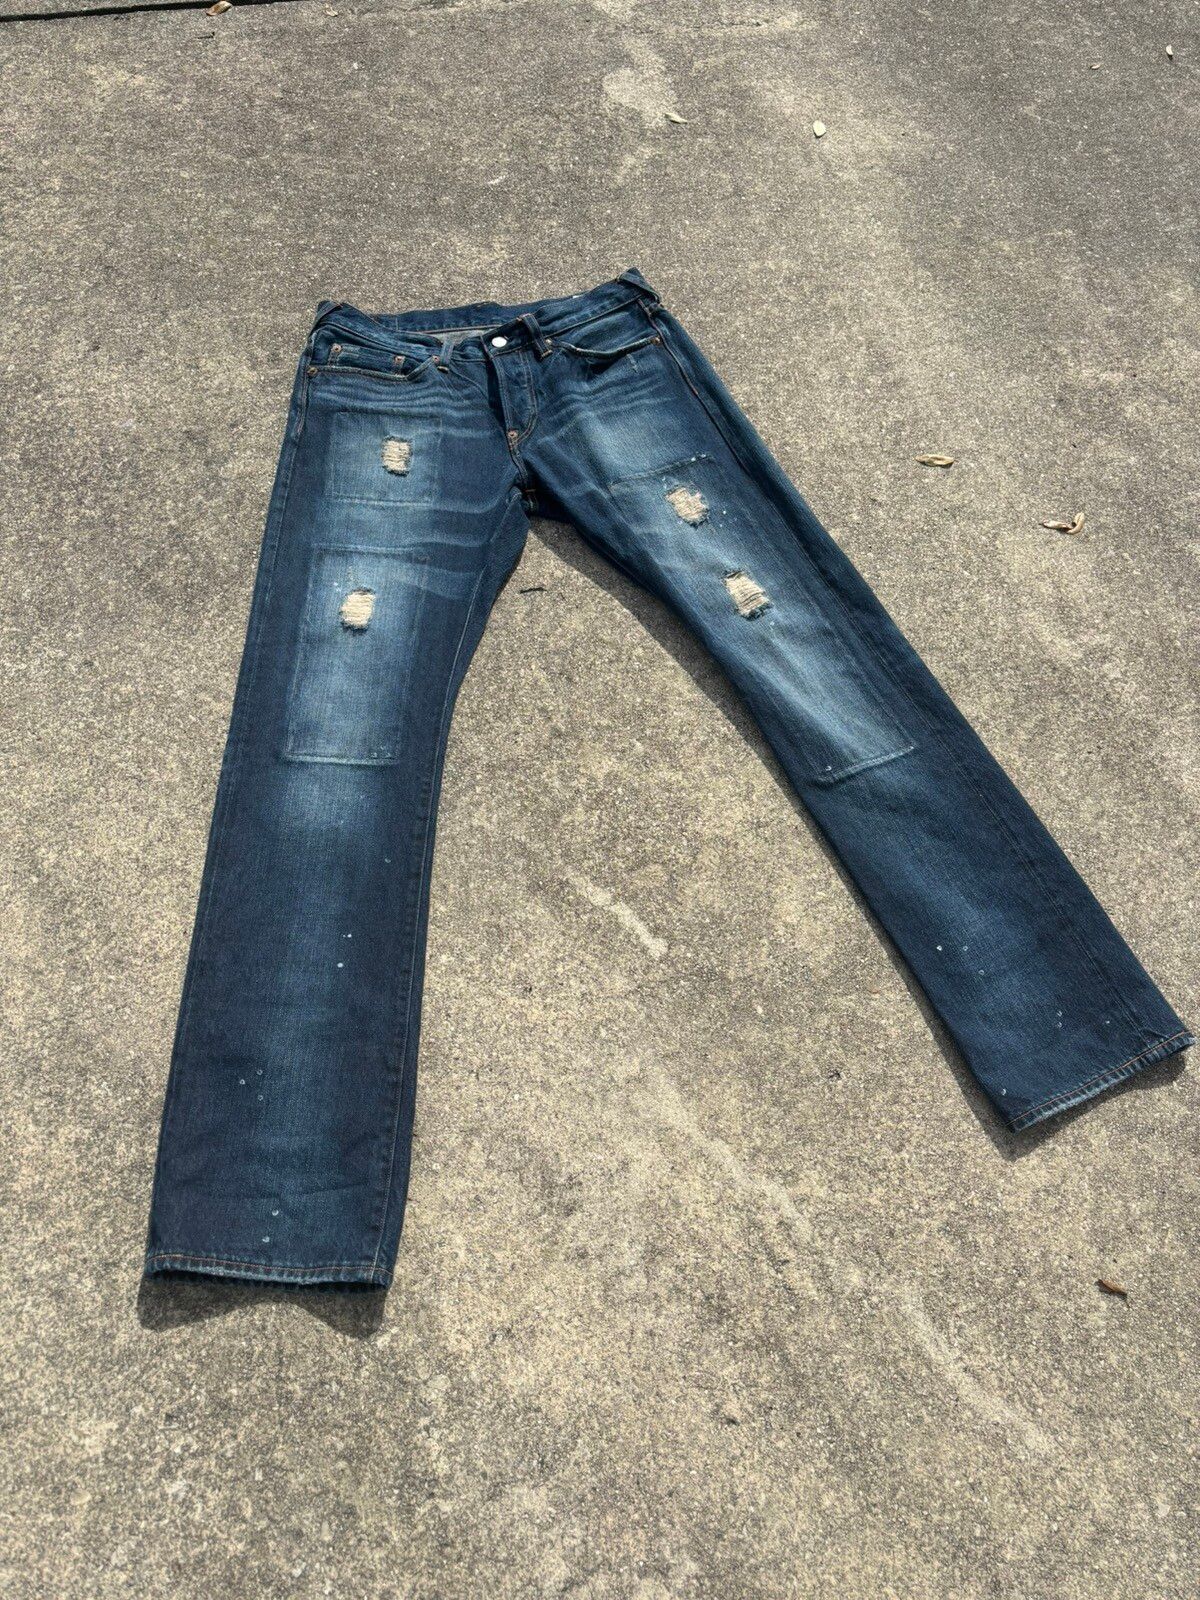 Evisu Evisu No.3 Denim Jeans Size US 33 - 4 Thumbnail